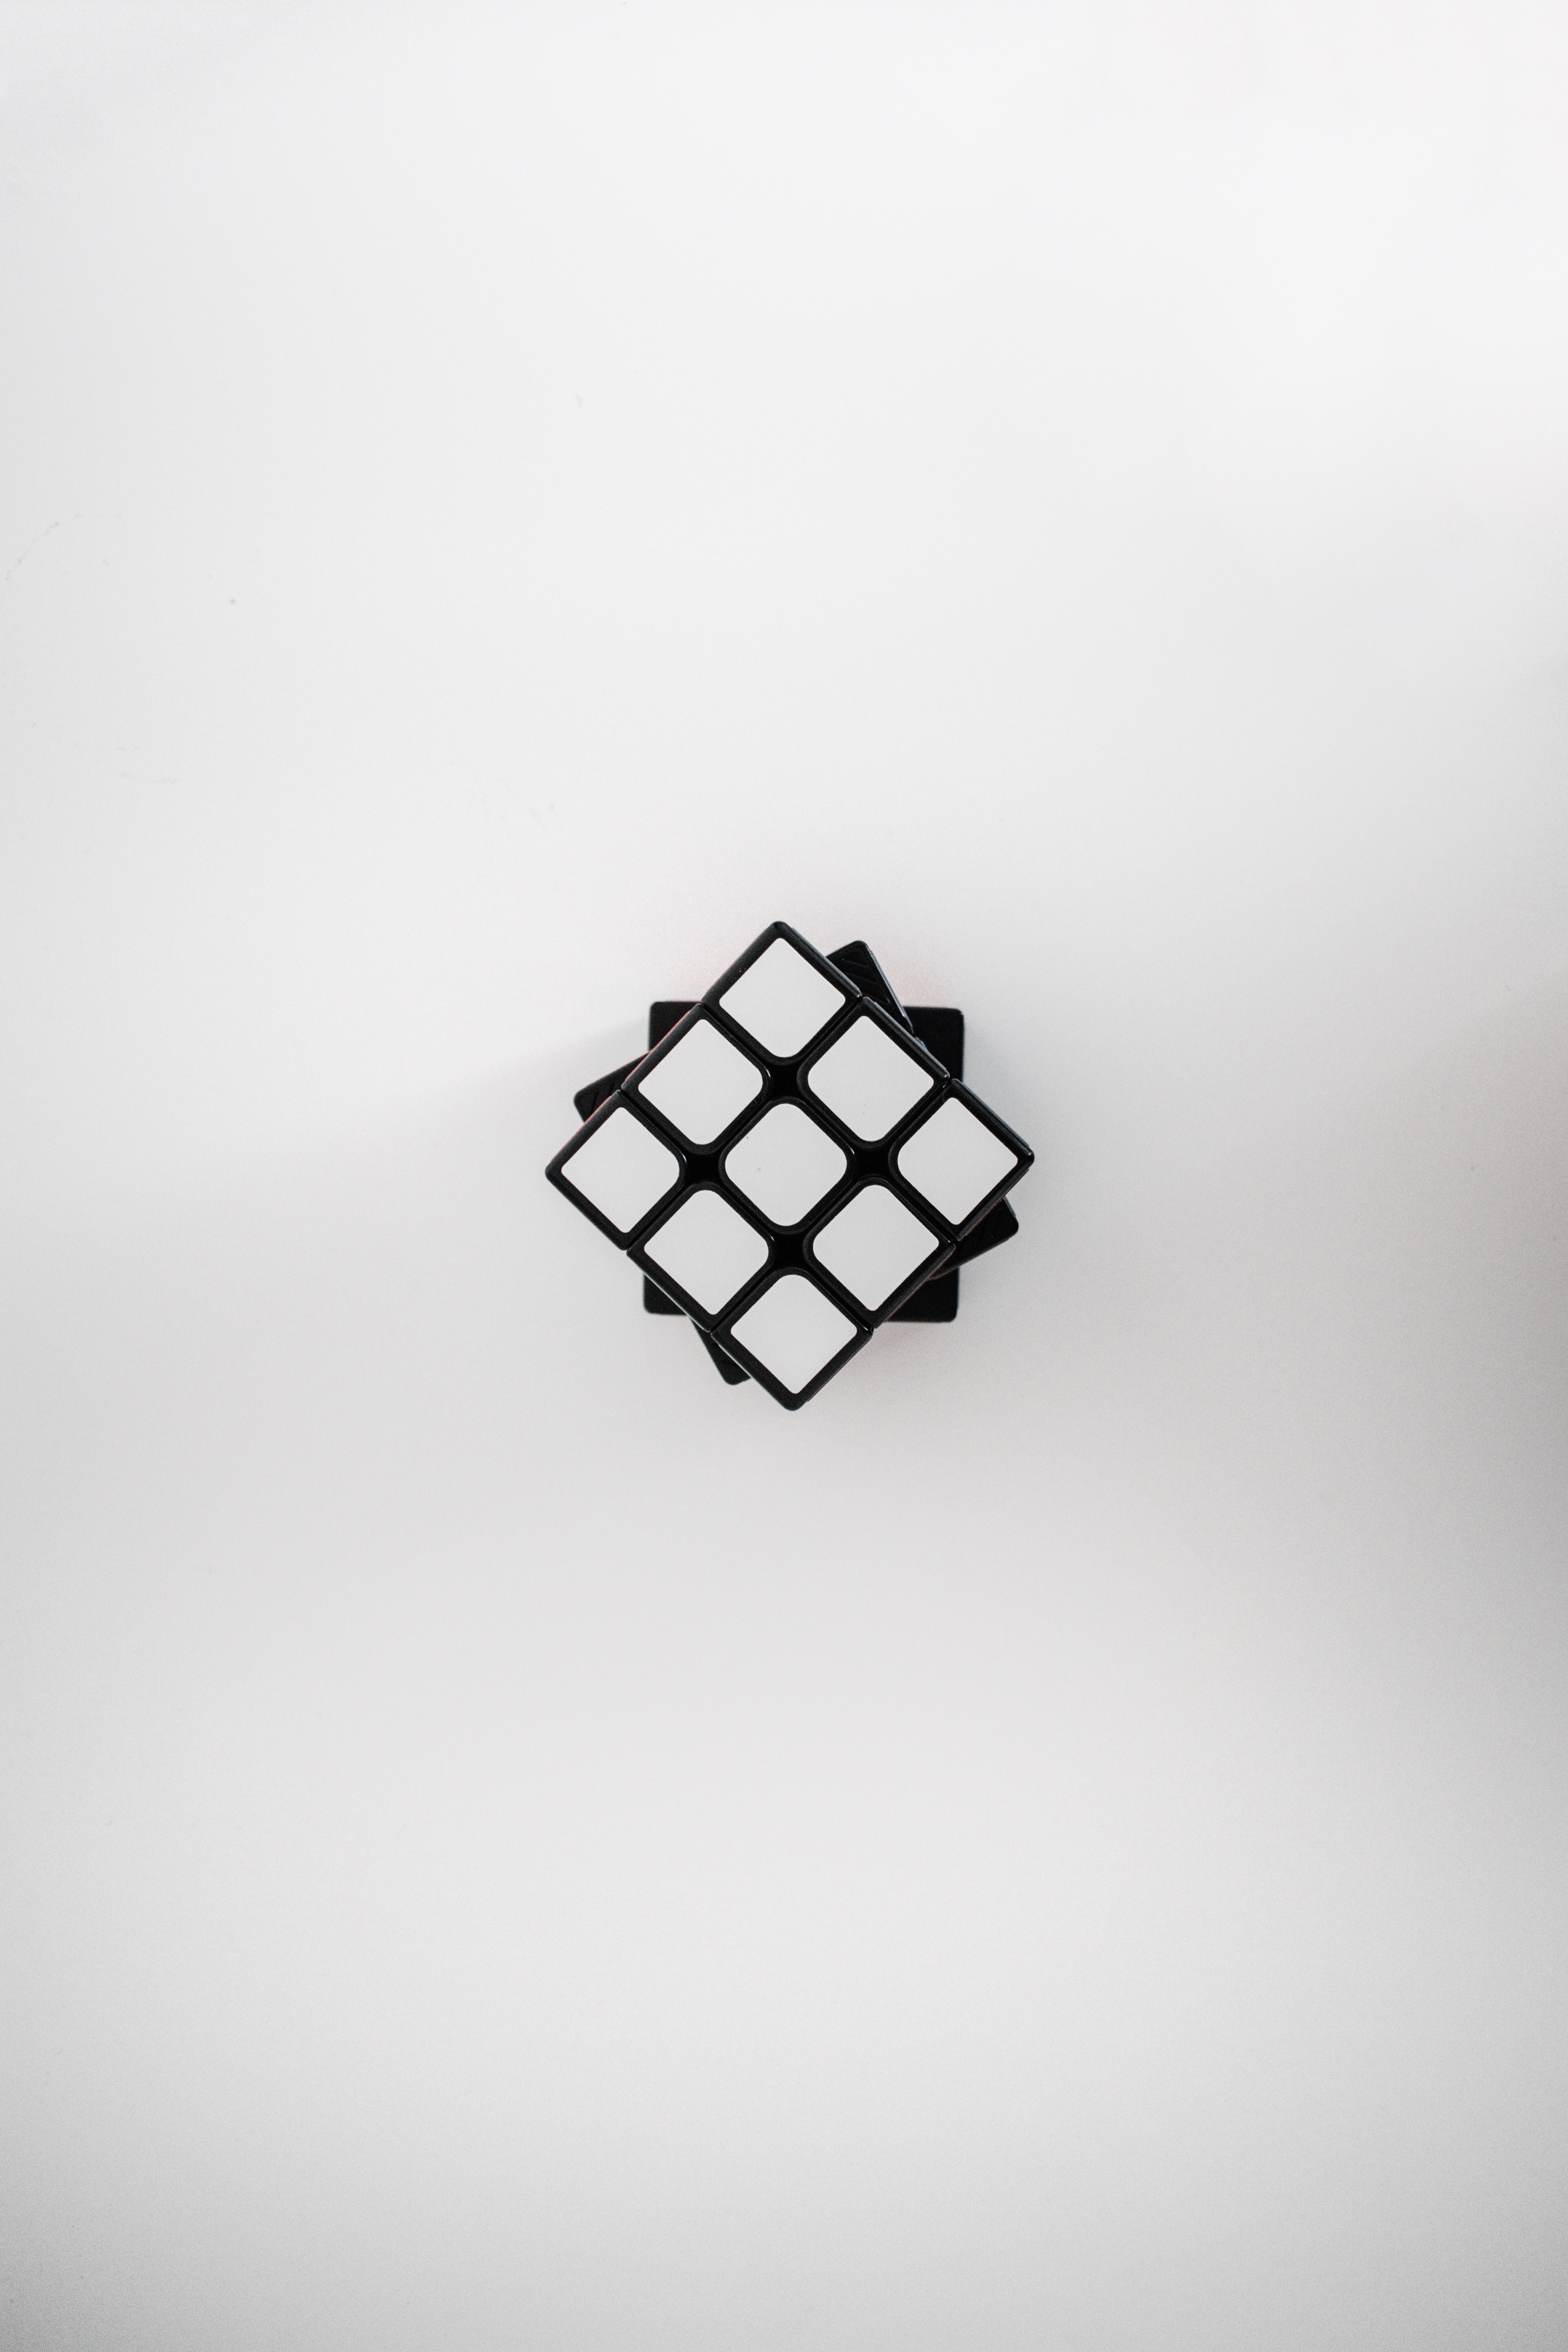 rubik cube wallpaper by georgekev  Download on ZEDGE  9142